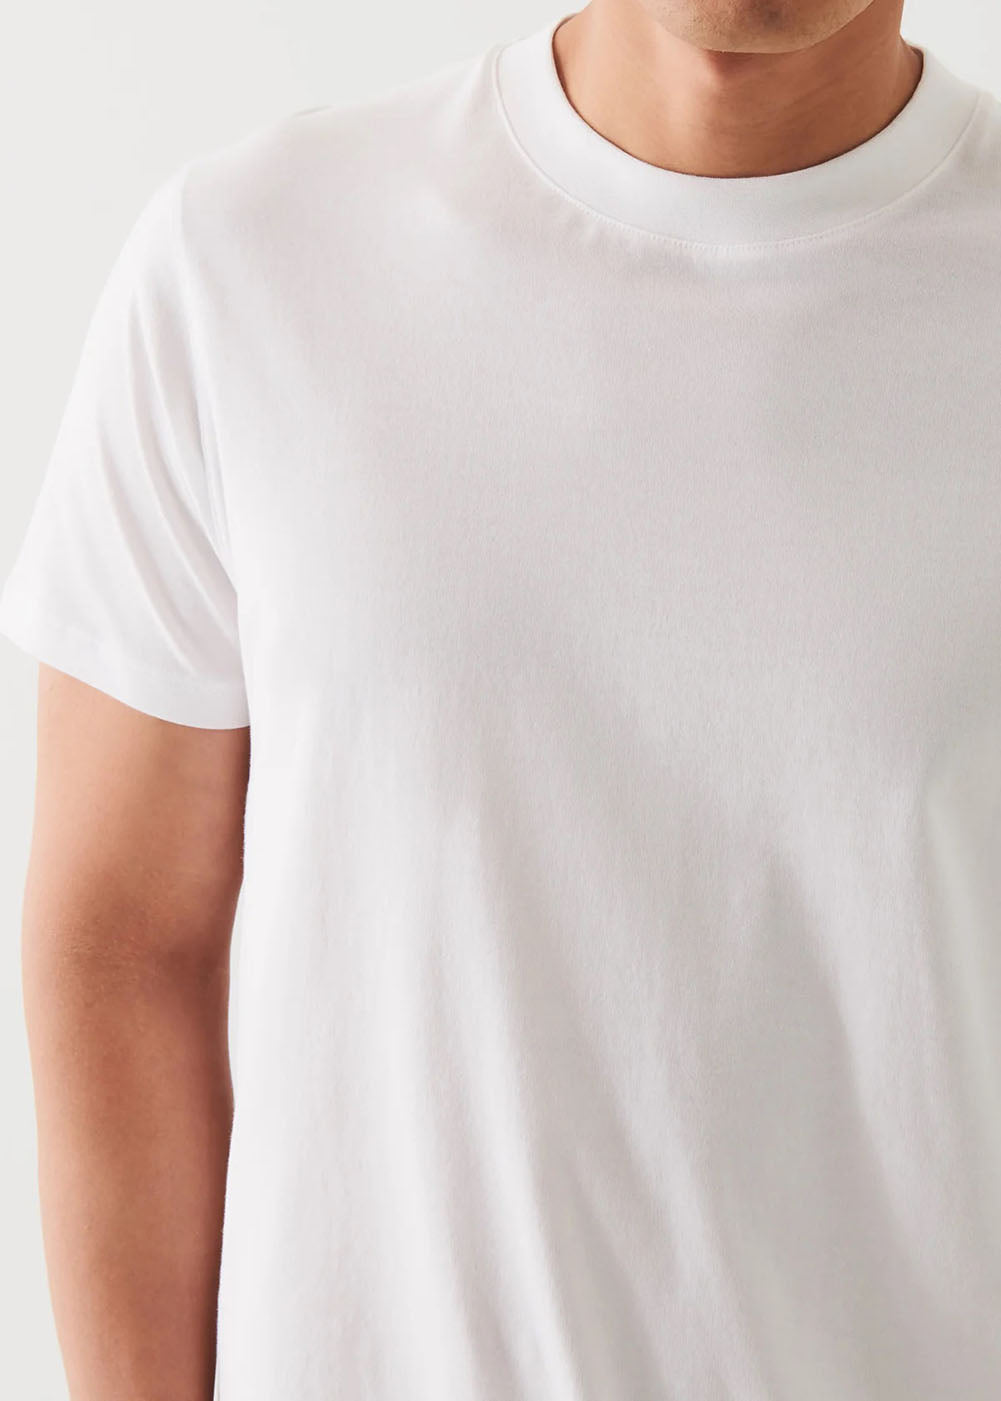 Organic Pima Cotton Short Sleeve Crew T-Shirt - White - Patrick Assaraf - Danali - P92C01V